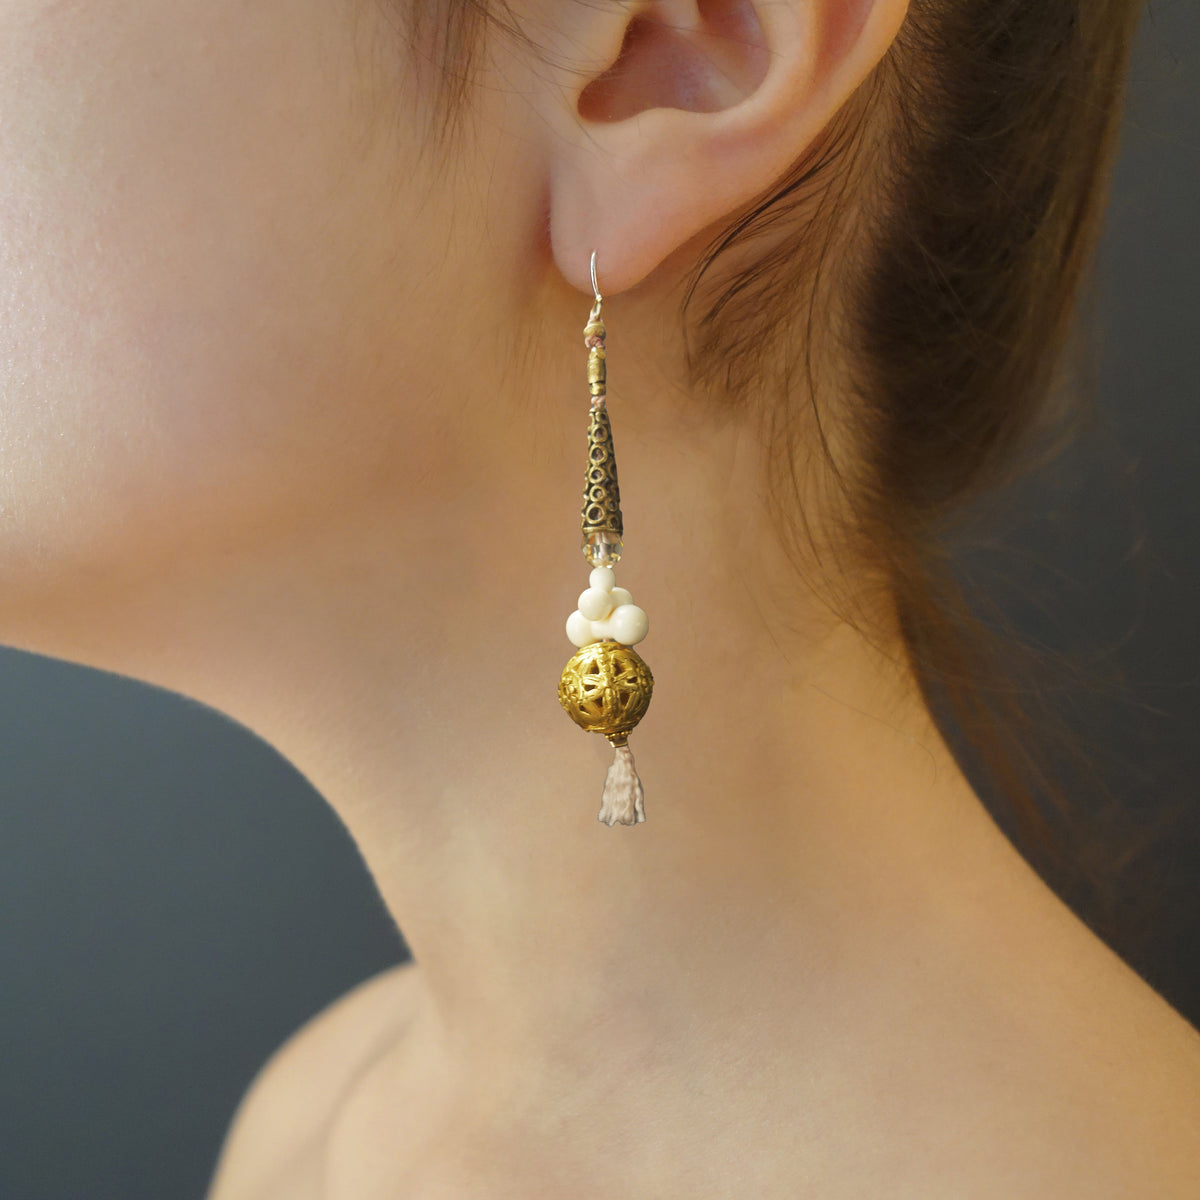 Afghani and Persian gold earrings: Silk Road